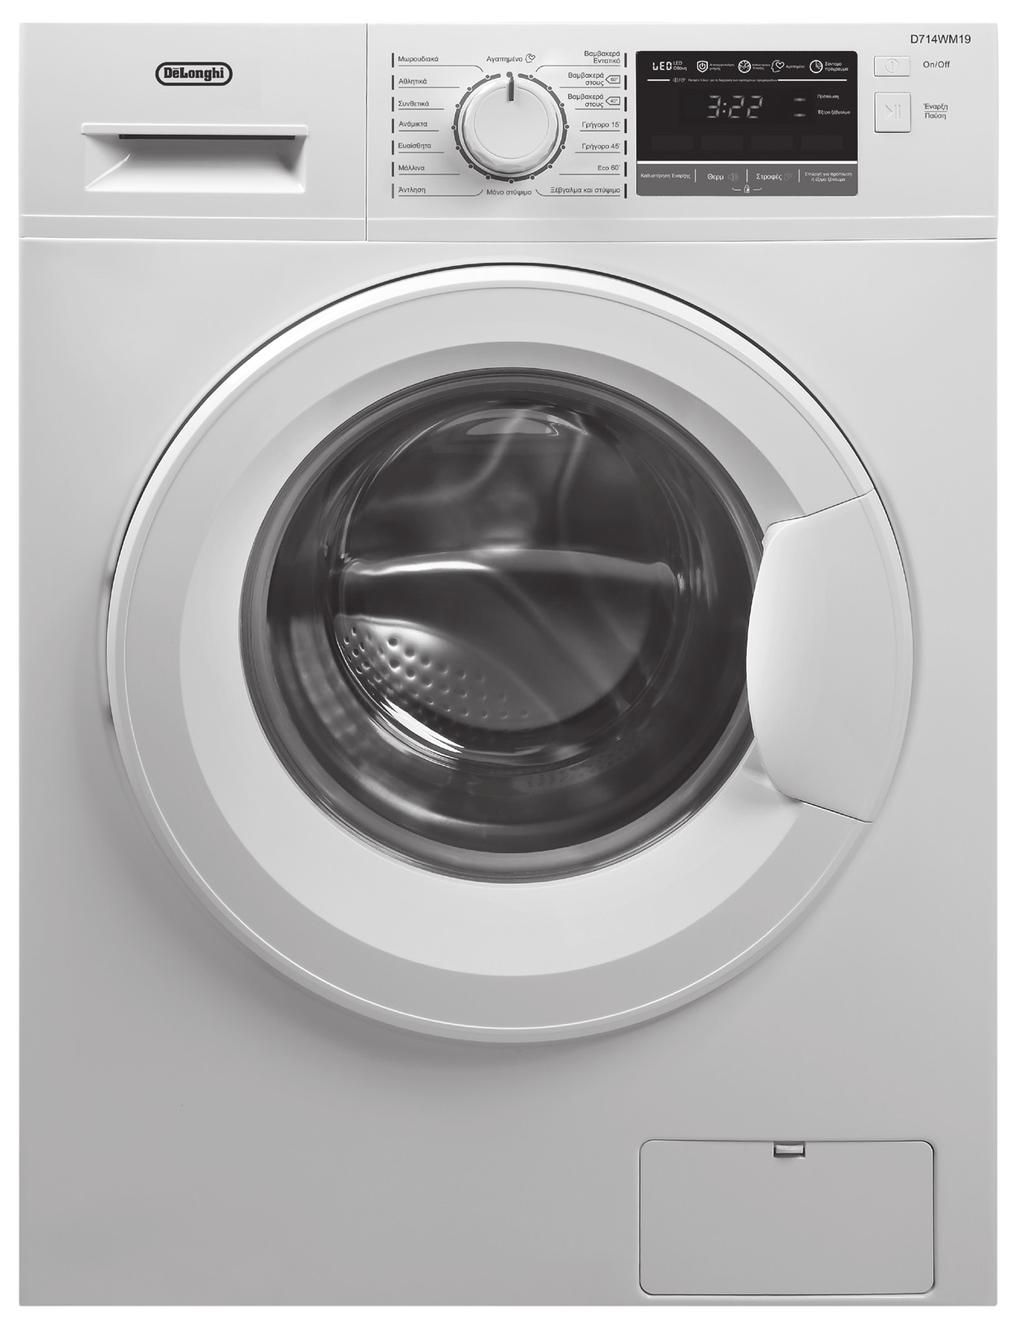 D714WM19. installation / instructions manual εγχειρίδιο εγκατάστασης /  οδηγιών 7KG washing machine GB Πλυντήριο 7KG - PDF Free Download